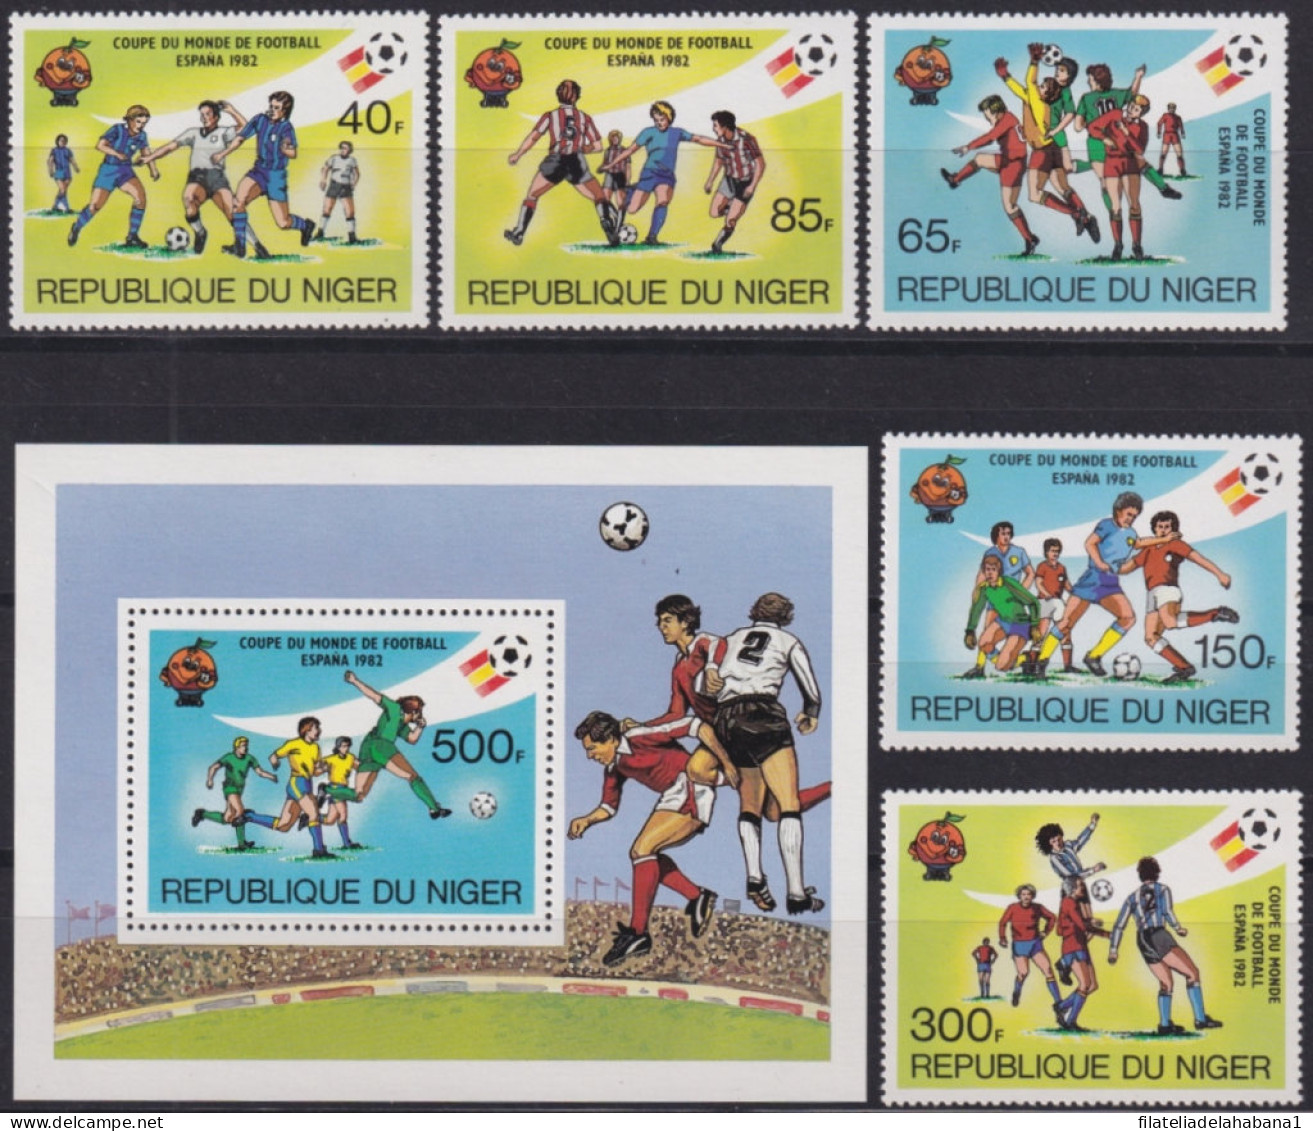 F-EX46791 NIGER MNH 1982 SPAIN CUP SOCCER FOOTBALL SET.  - 1982 – Spain